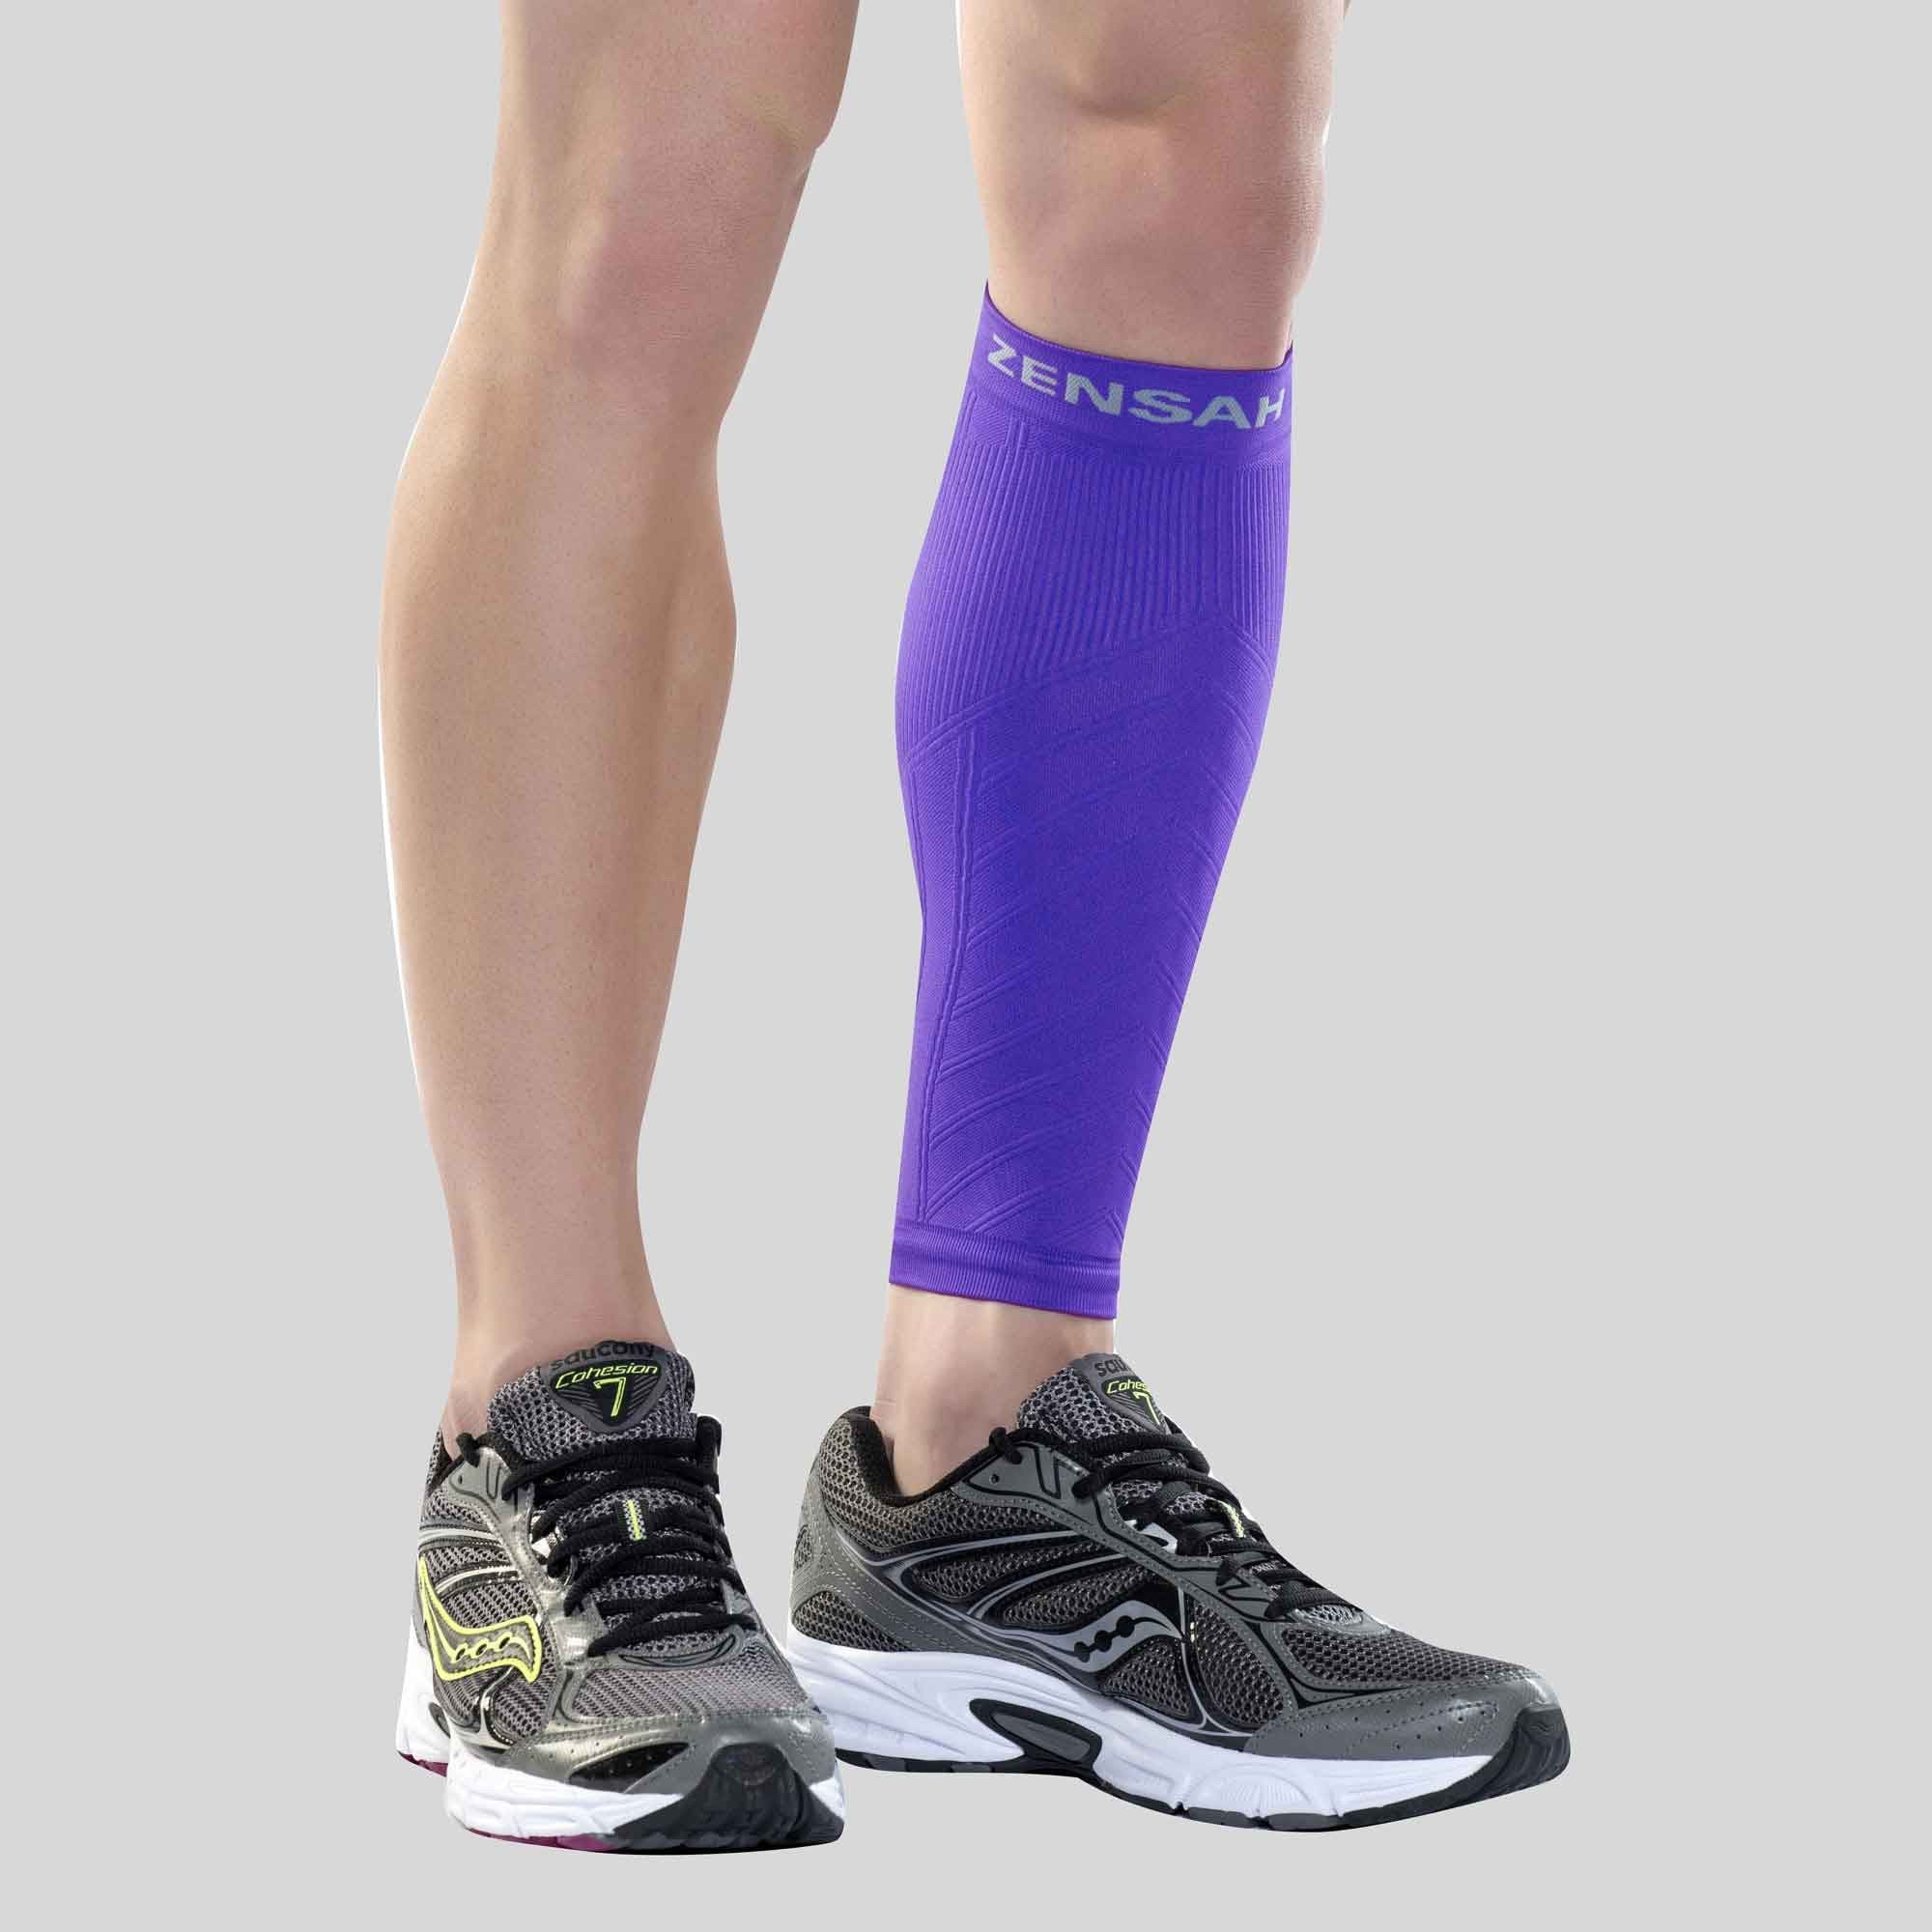 2 Small Calf Sleeve Leg Socks Compression Support Shin Splints Lycra Brace  Blue 